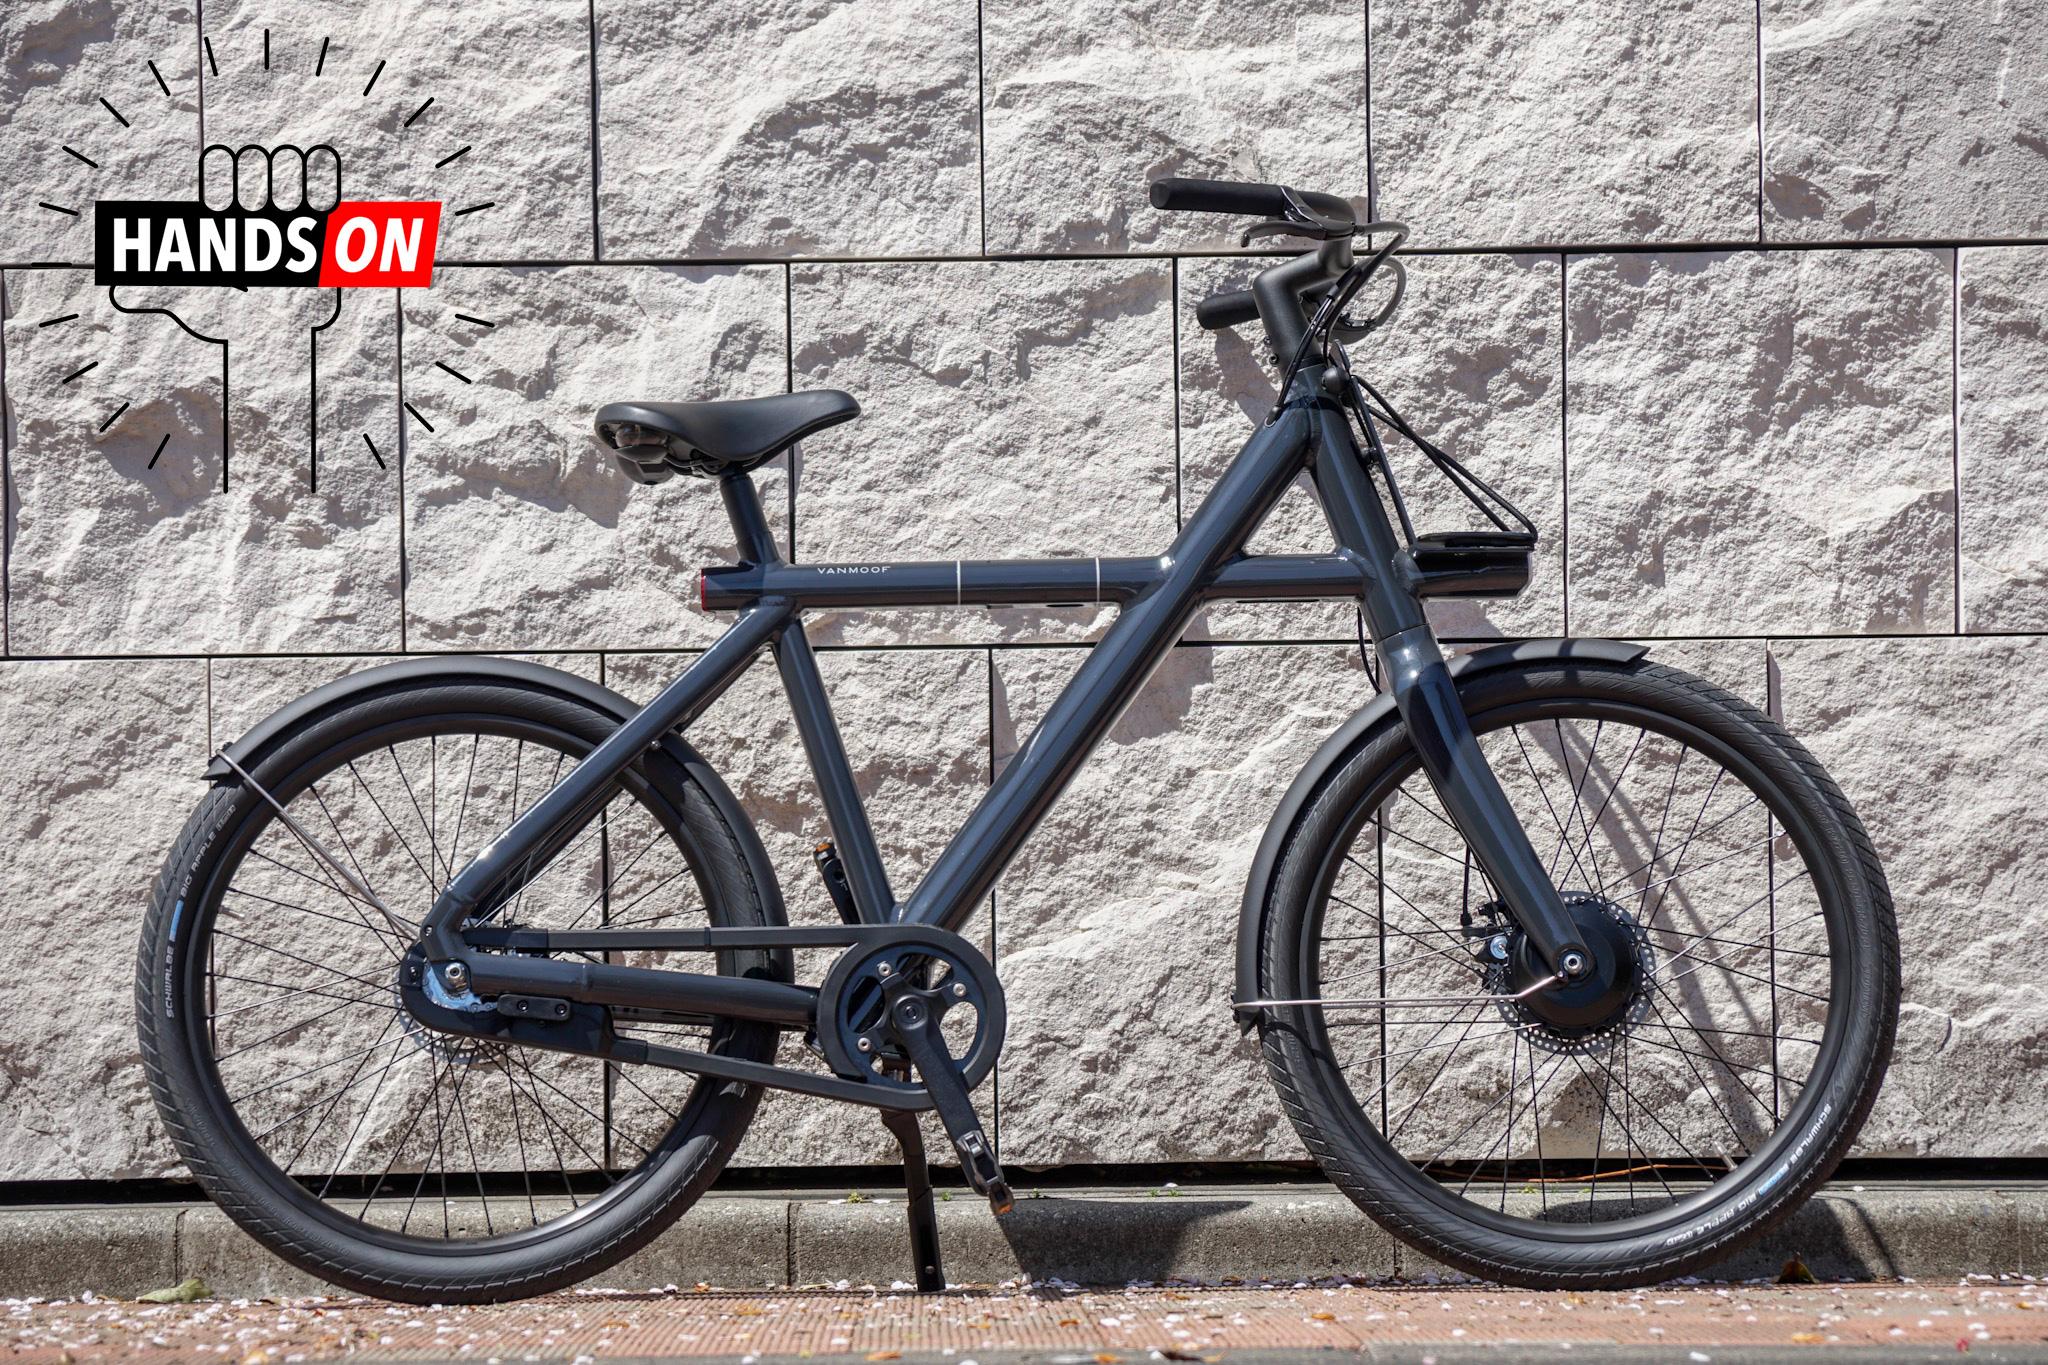 VanMoofの電動自転車｢Electrified X2｣ハンズオン：Xを模したフレームが 